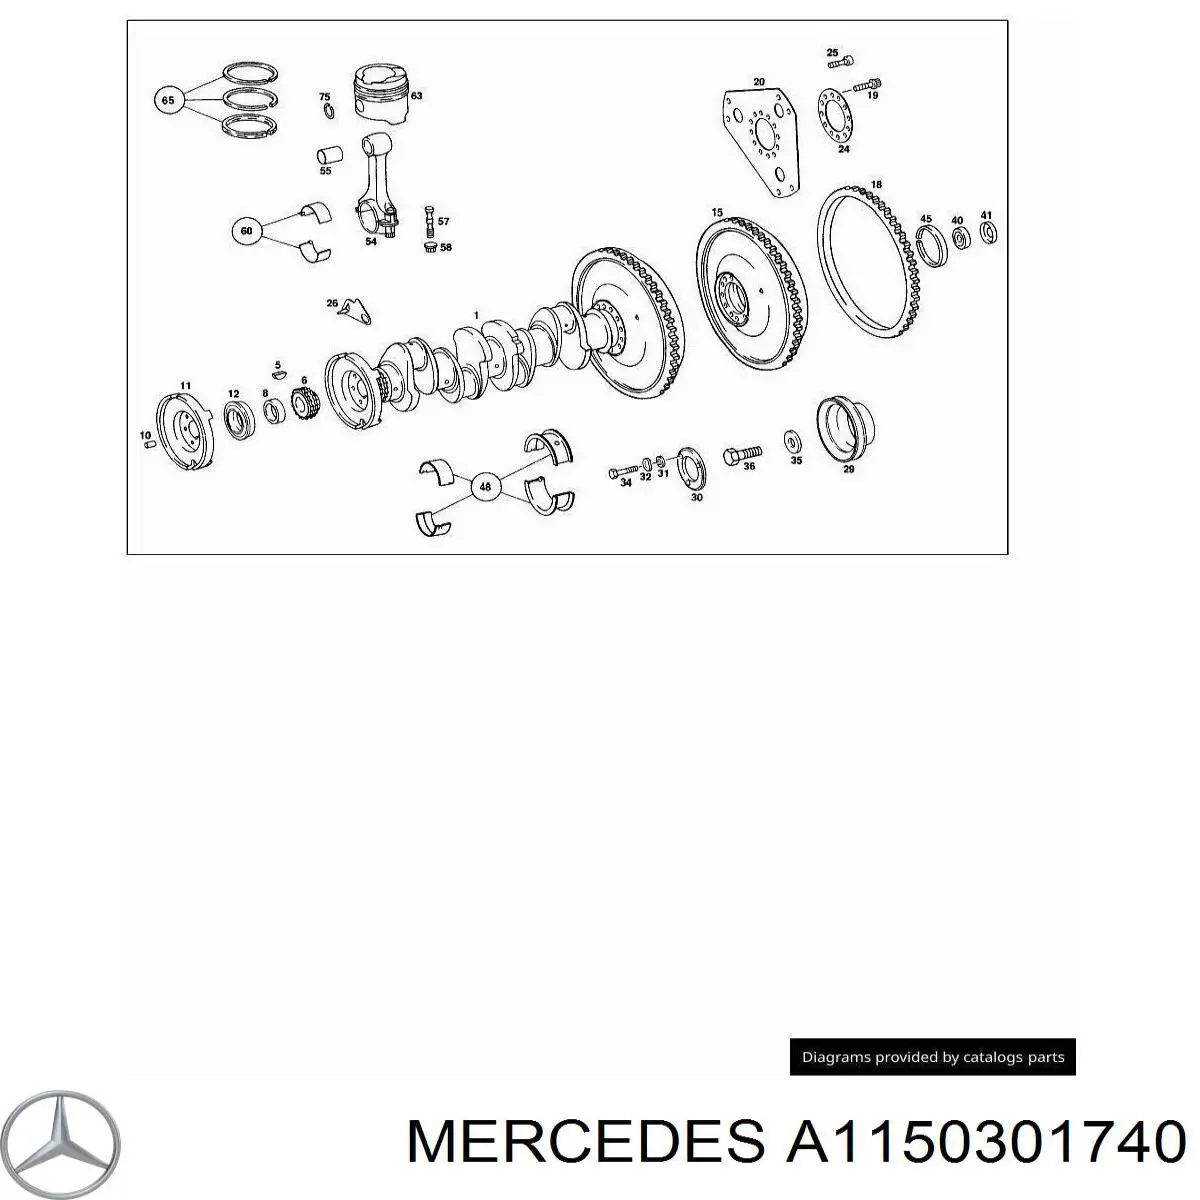 A1150301640 Mercedes вкладыши коленвала коренные, комплект, стандарт (std)